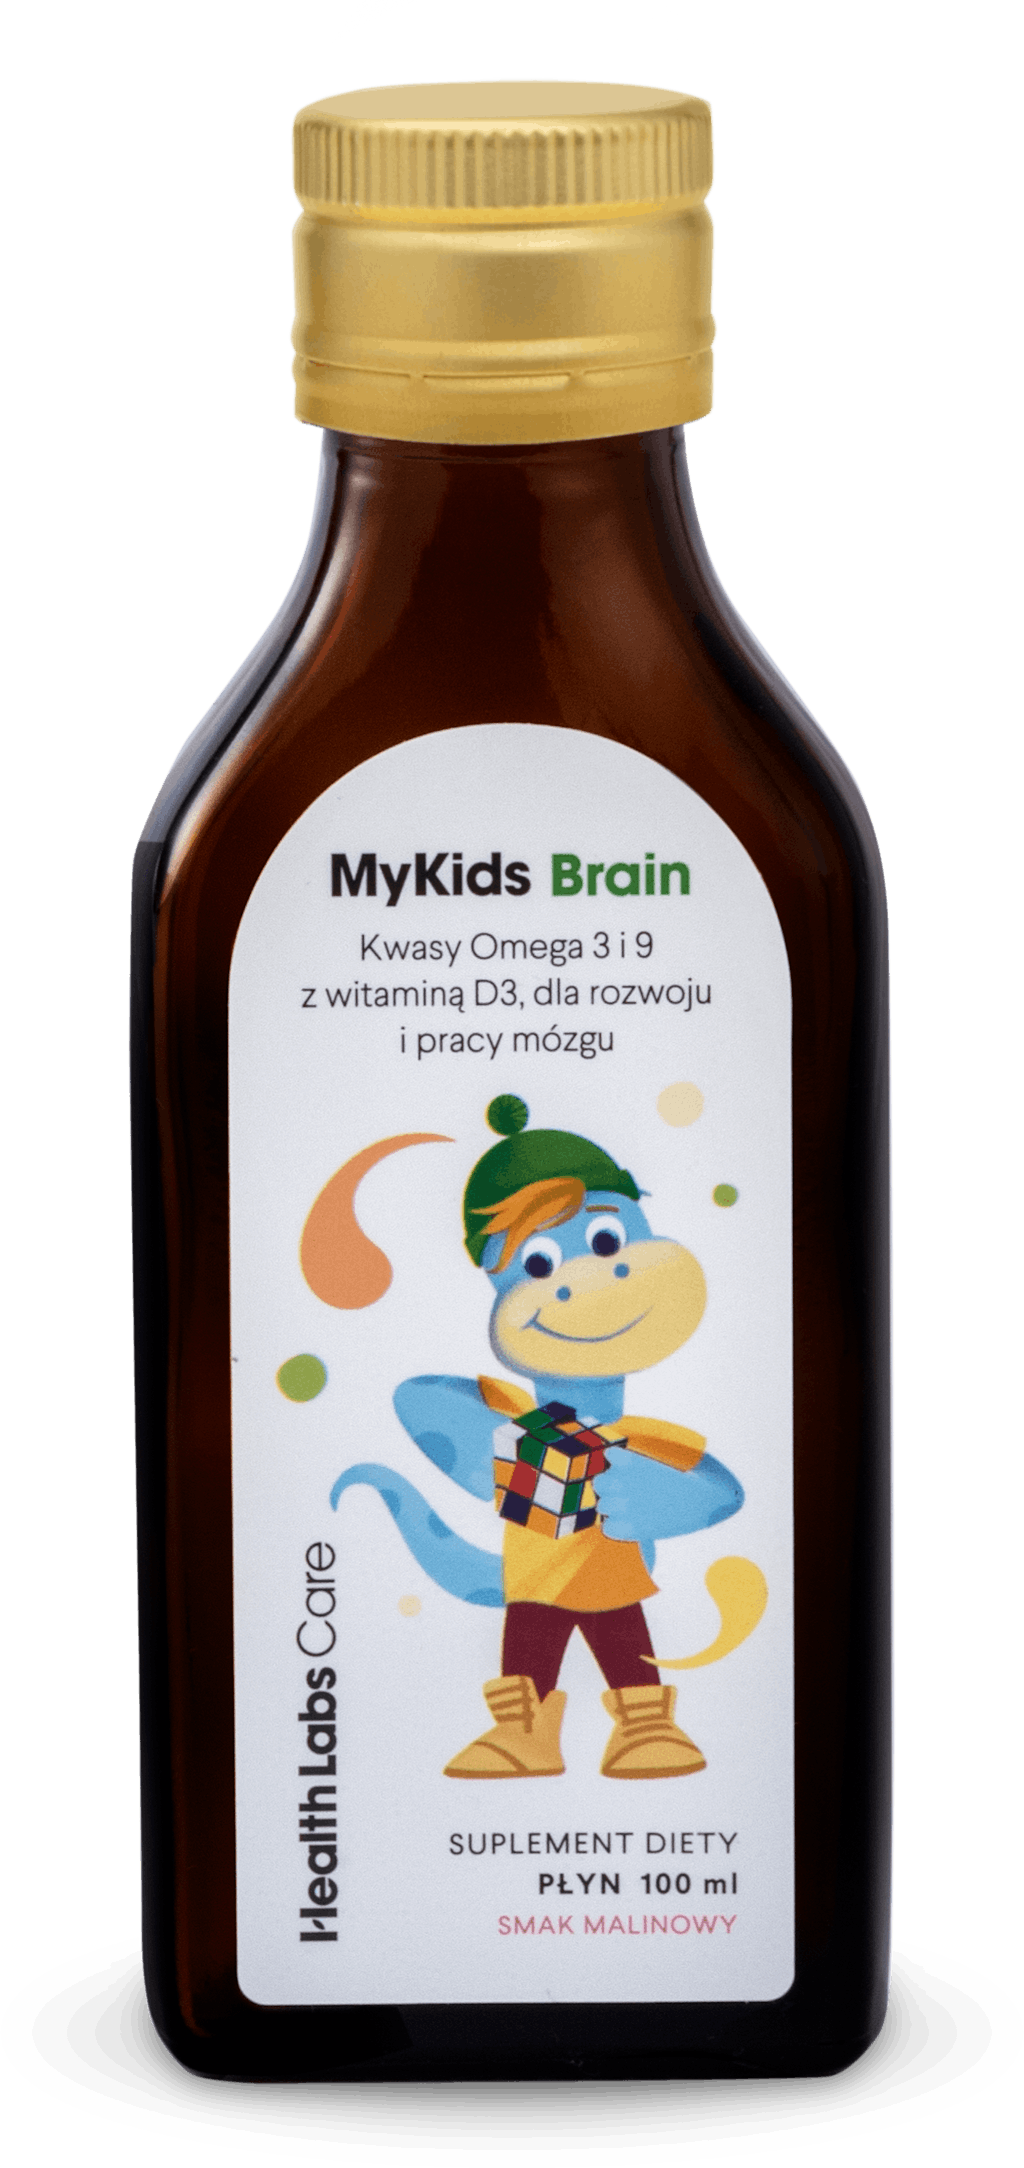 MyKids Brain